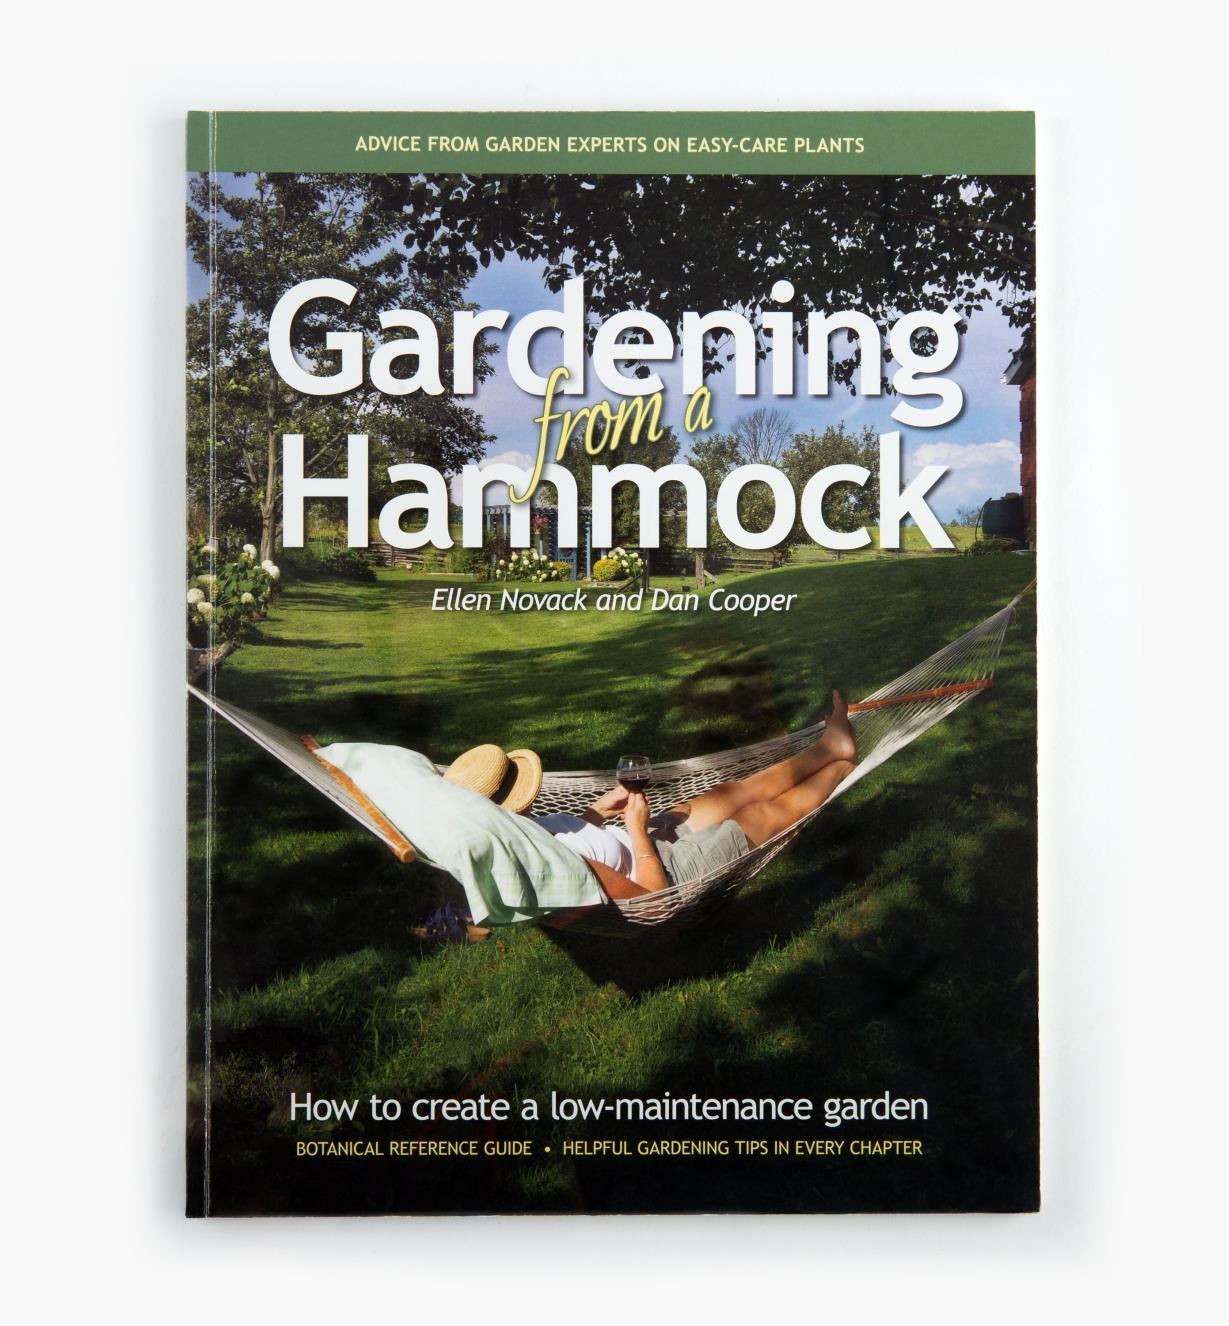 Gardening from a Hammock, by Dan Cooper and Ellen Novack